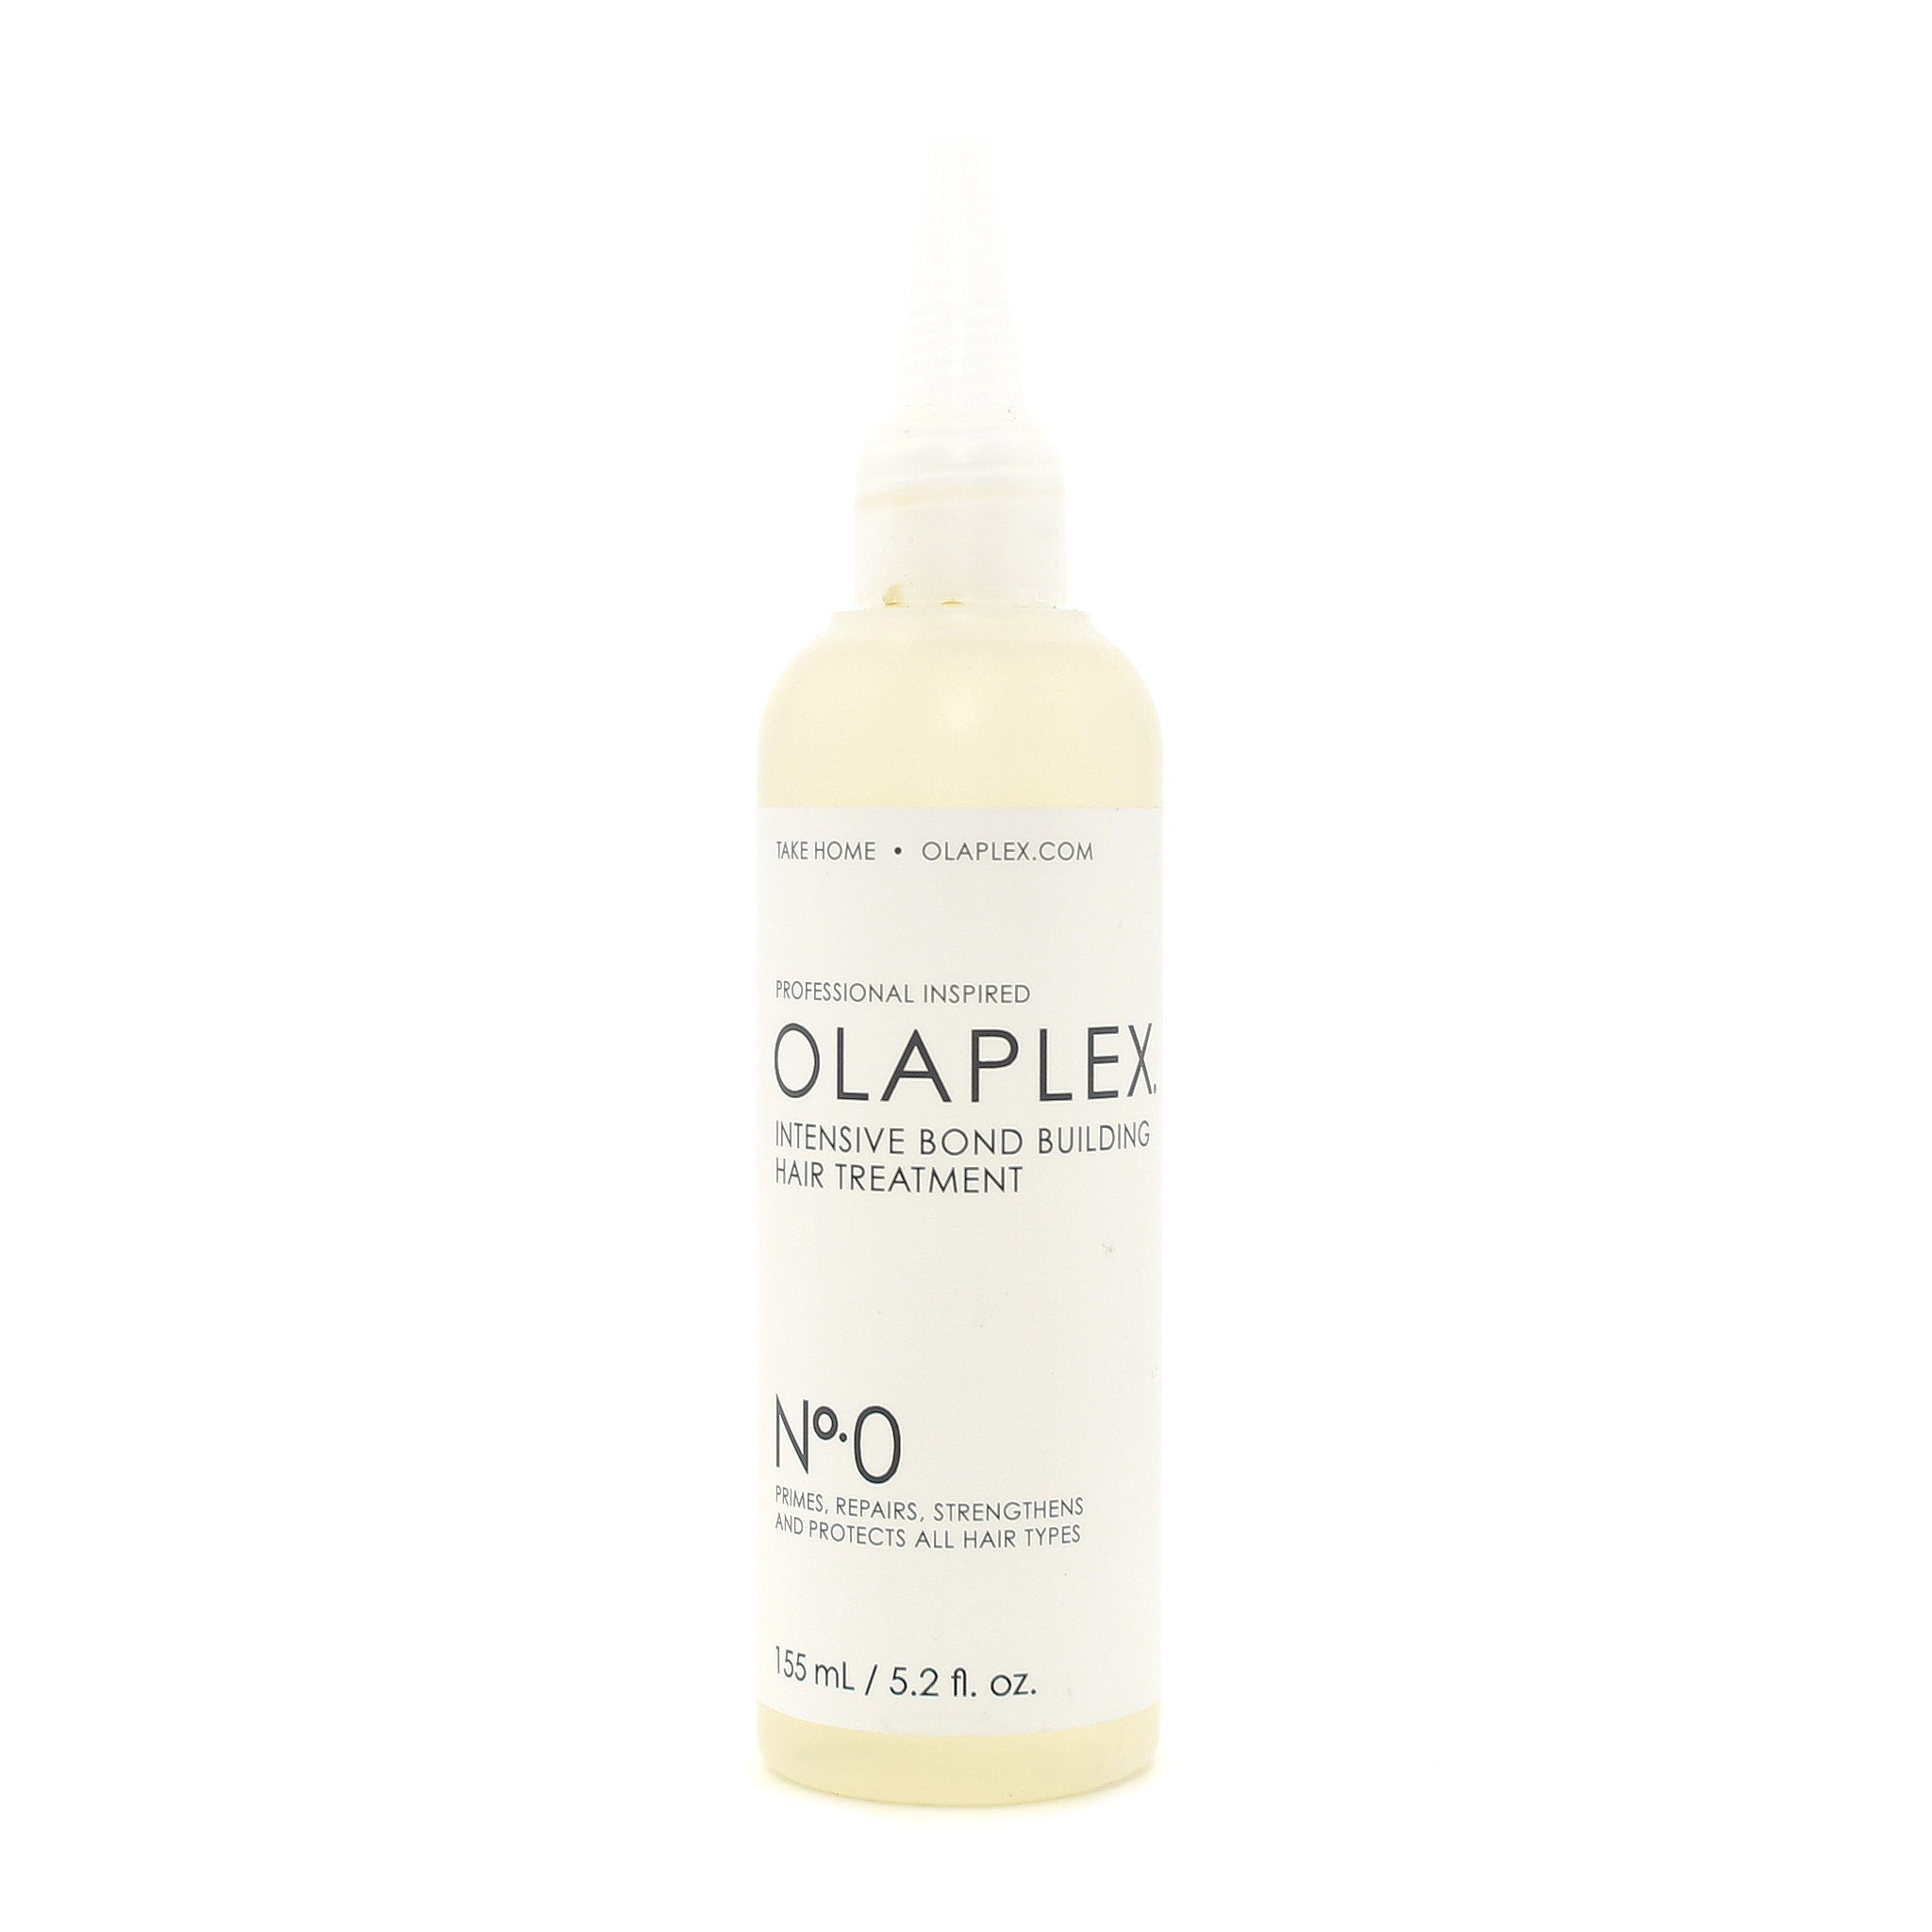 OLAPLEX Intensive Bond Building Hair Treatment 5.2 oz